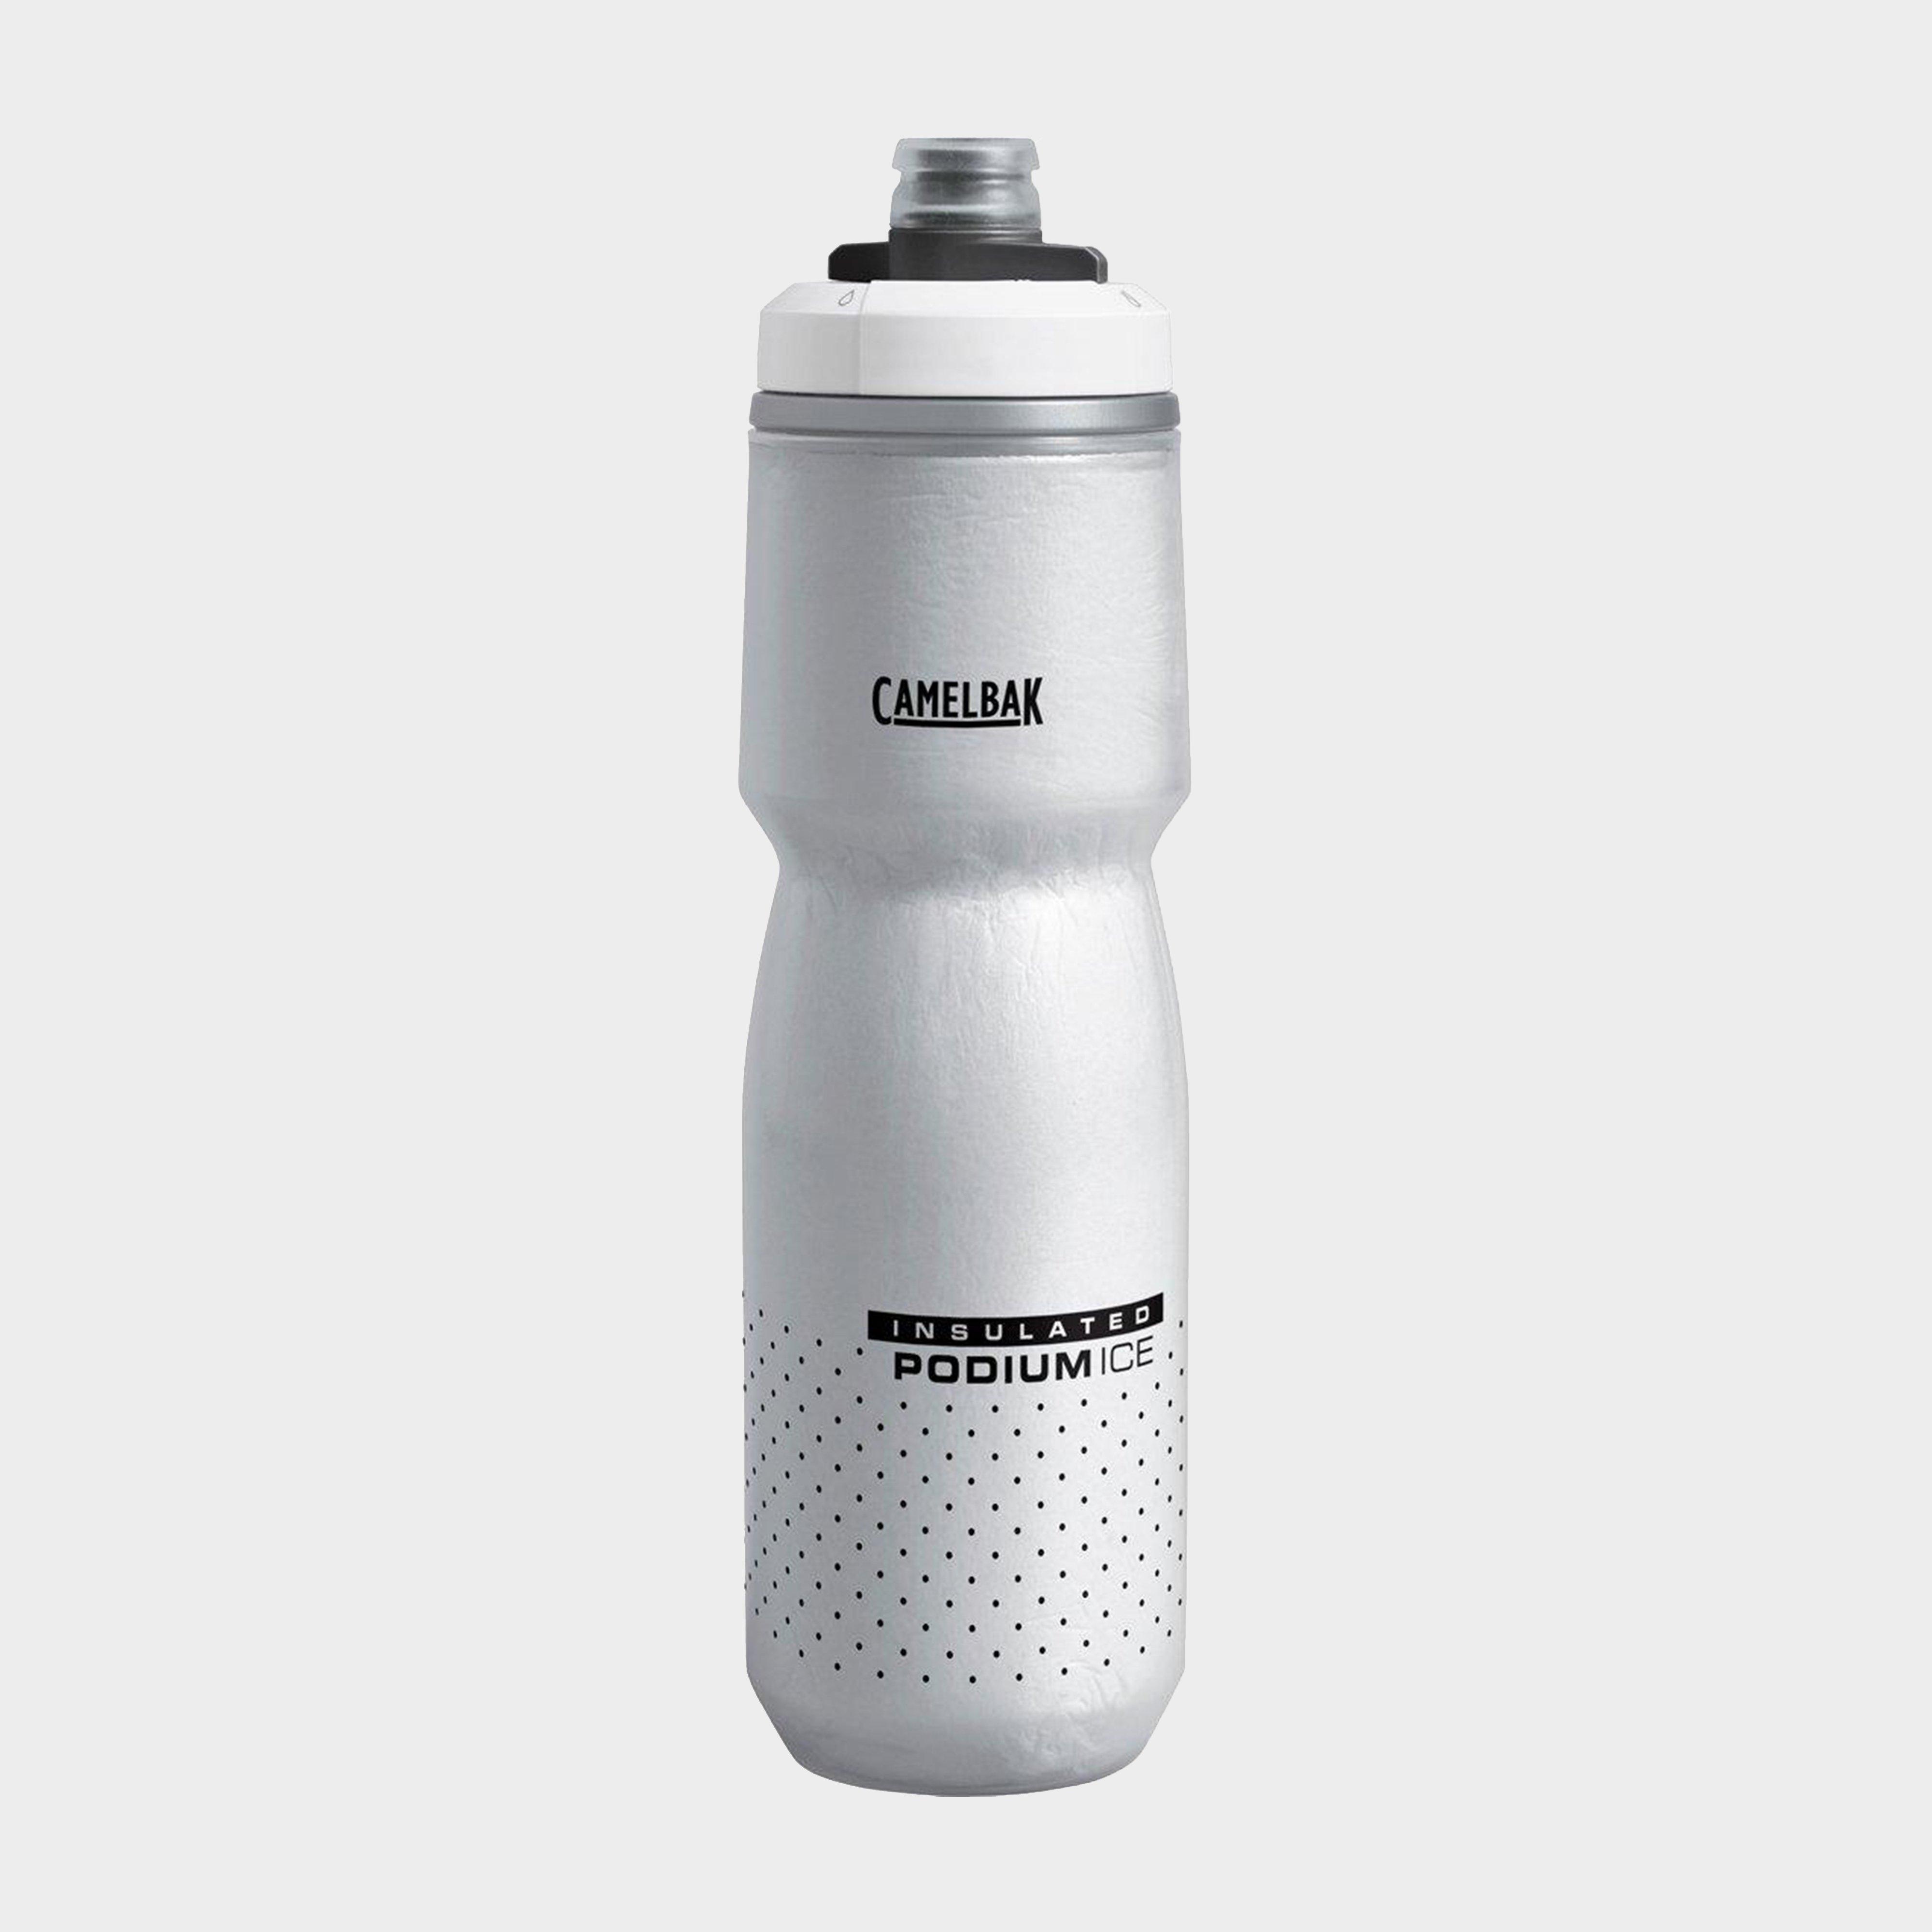 Go Outdoors Camelbak Podium Ice Insulated Bottle - 620ml, White